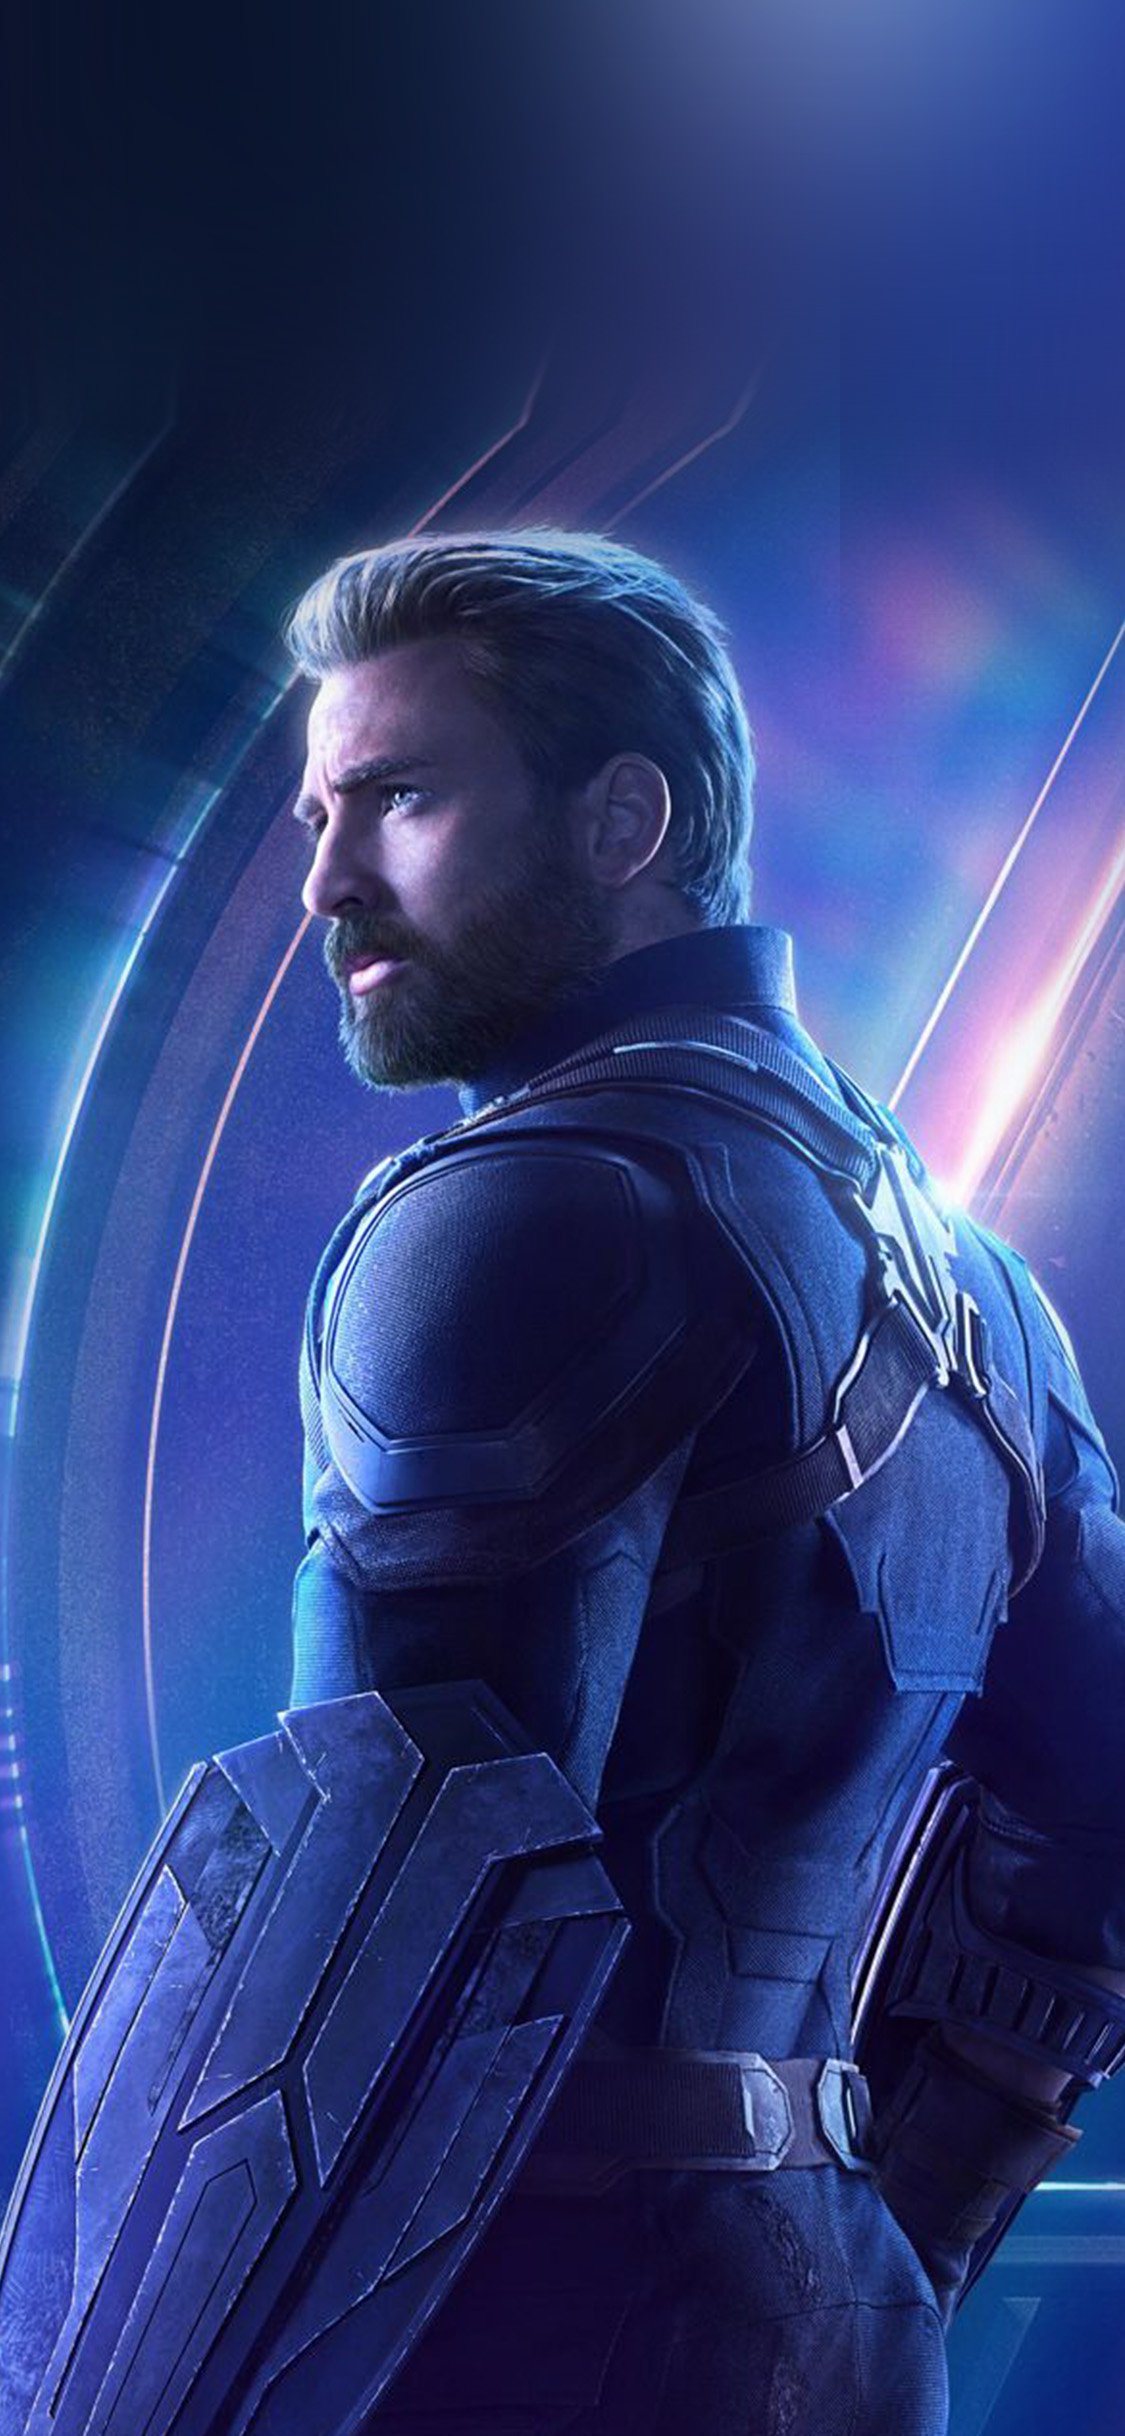 Captain america avengers hero chris evans iPhone wallpaper 